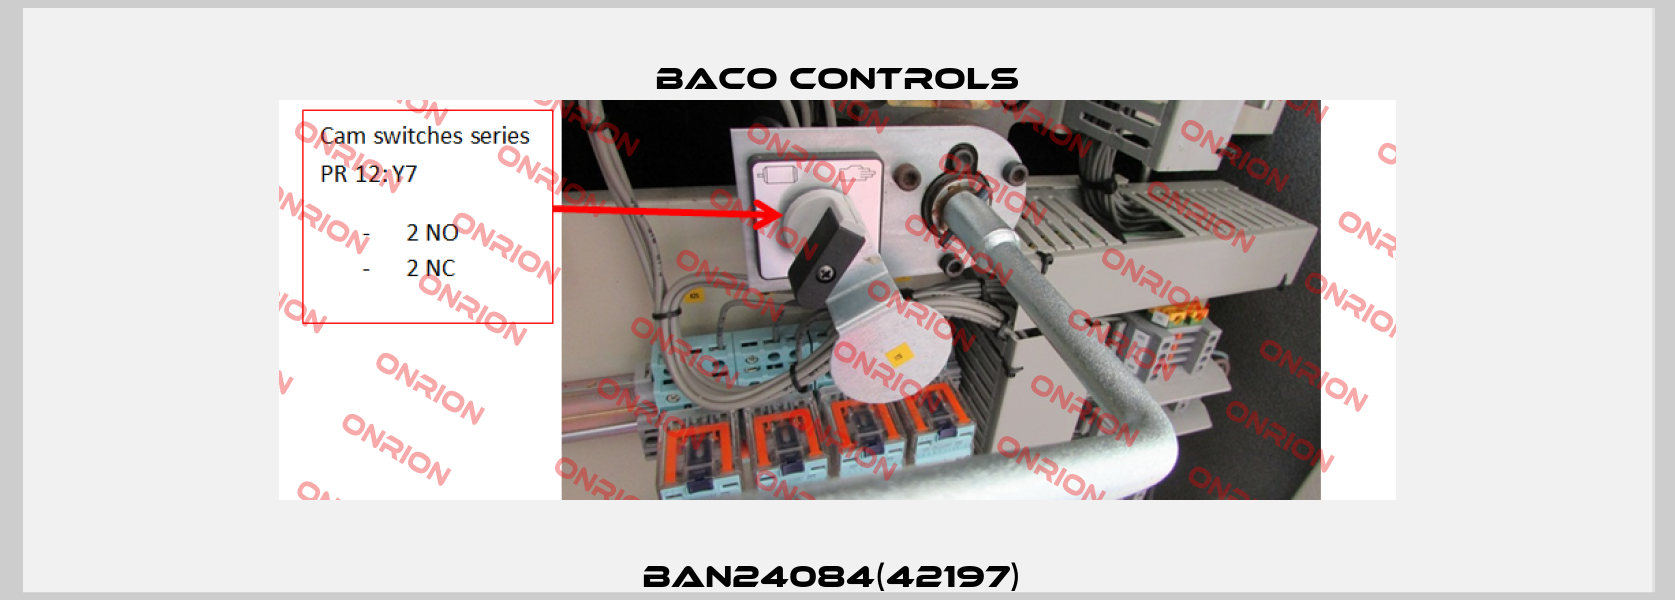 BAN24084(42197)  Baco Controls